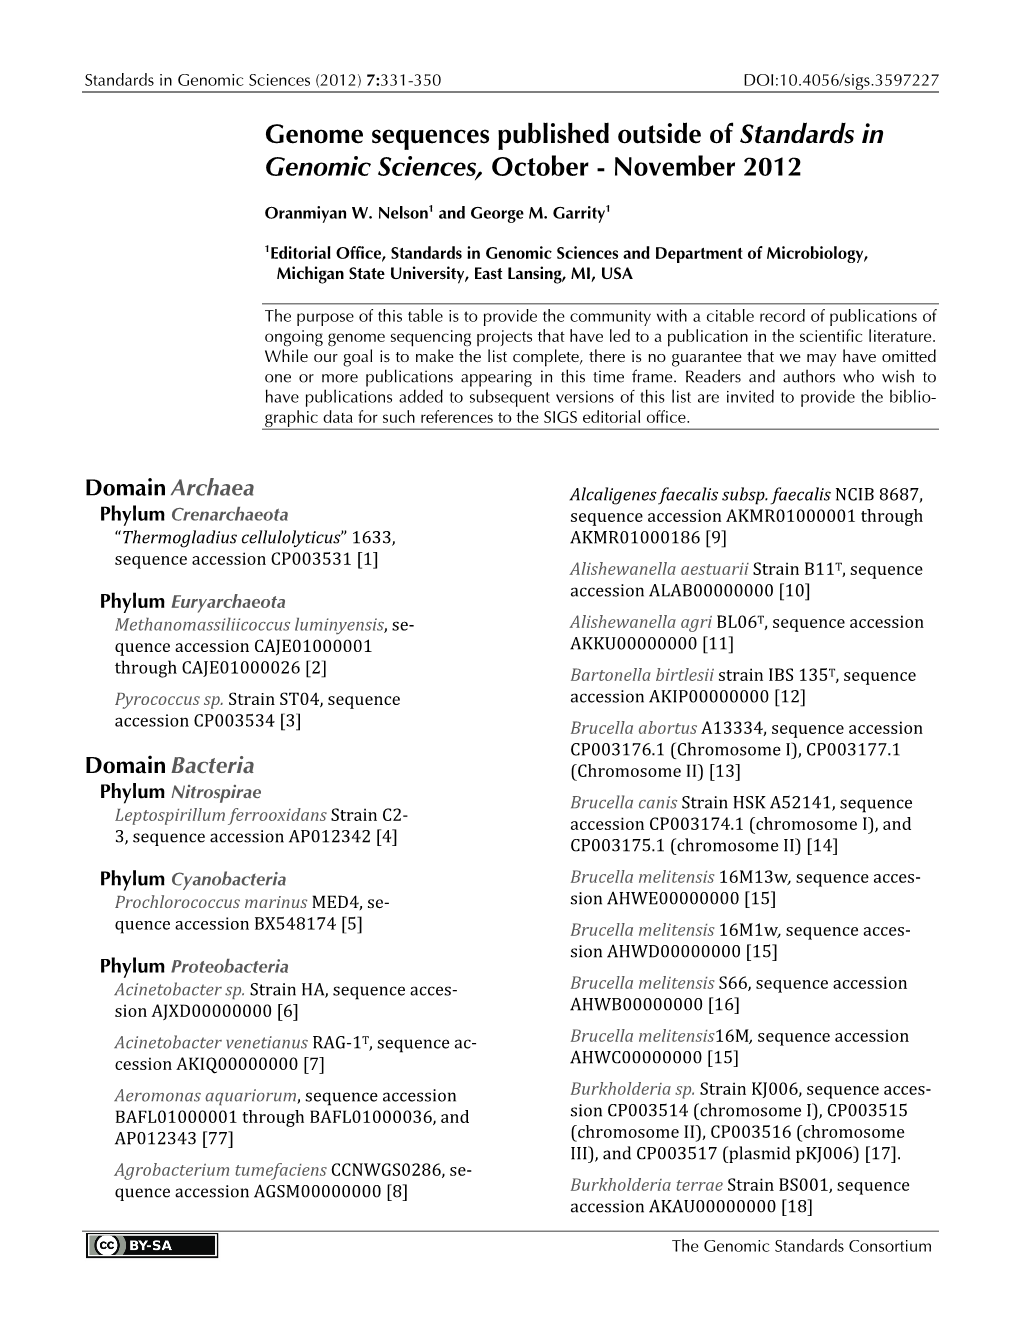 Genomes Outside SIGS October - November 2012 Burkholderia Thailandensis MSMB43, Sequence Hydrogenophaga Sp